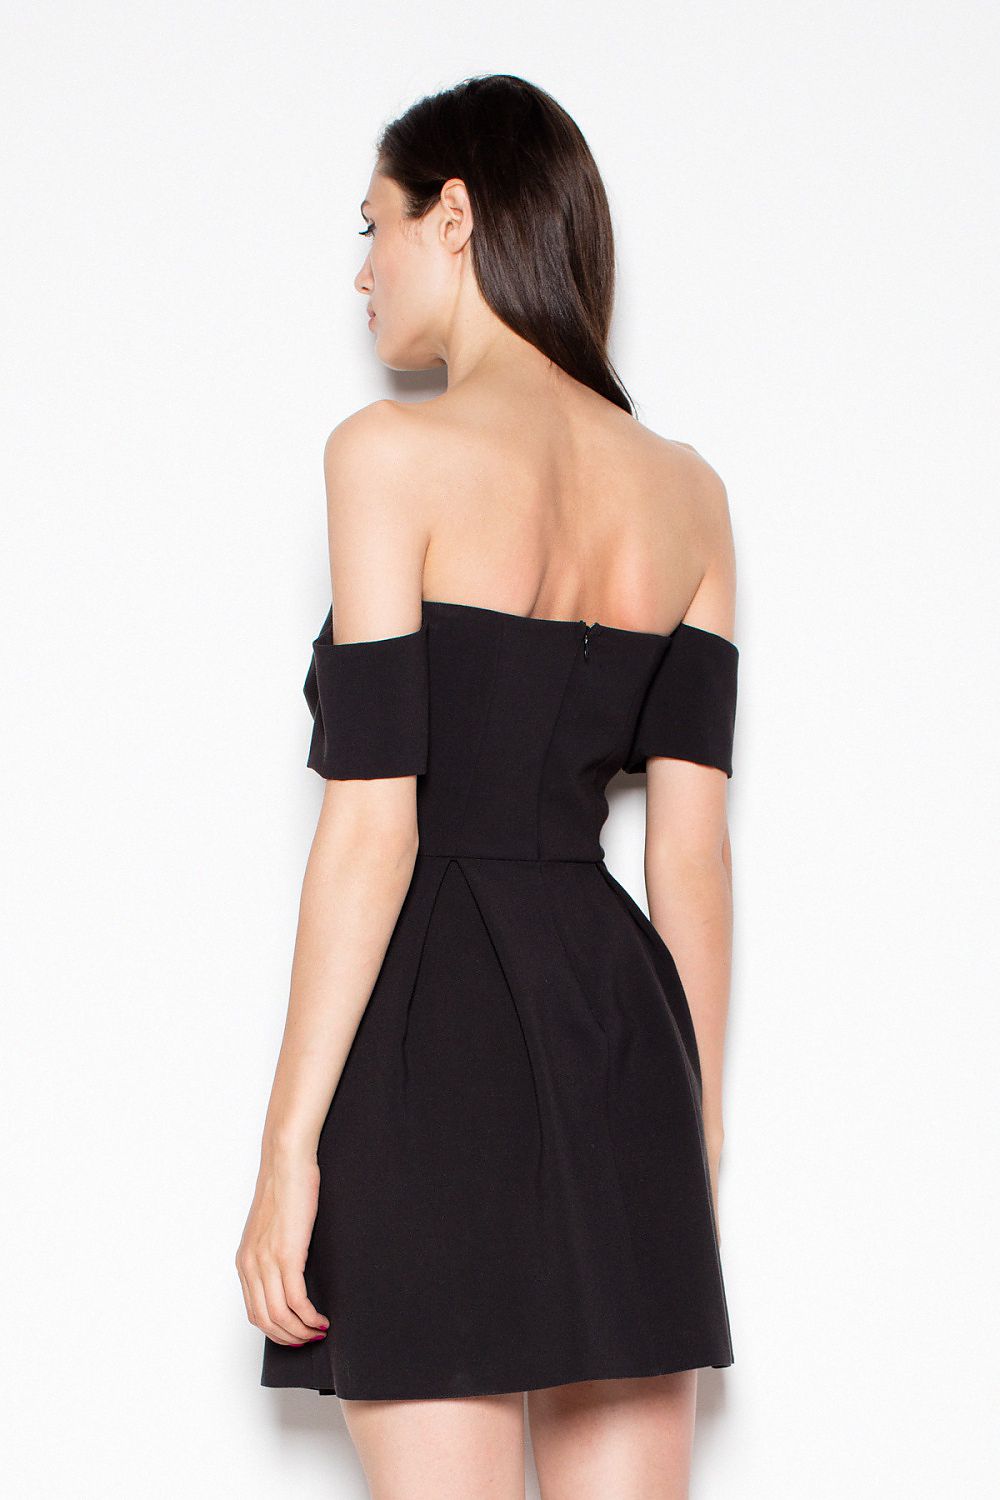 TEEK - Black Off-Shoulder Evening Dress DRESS TEEK M   